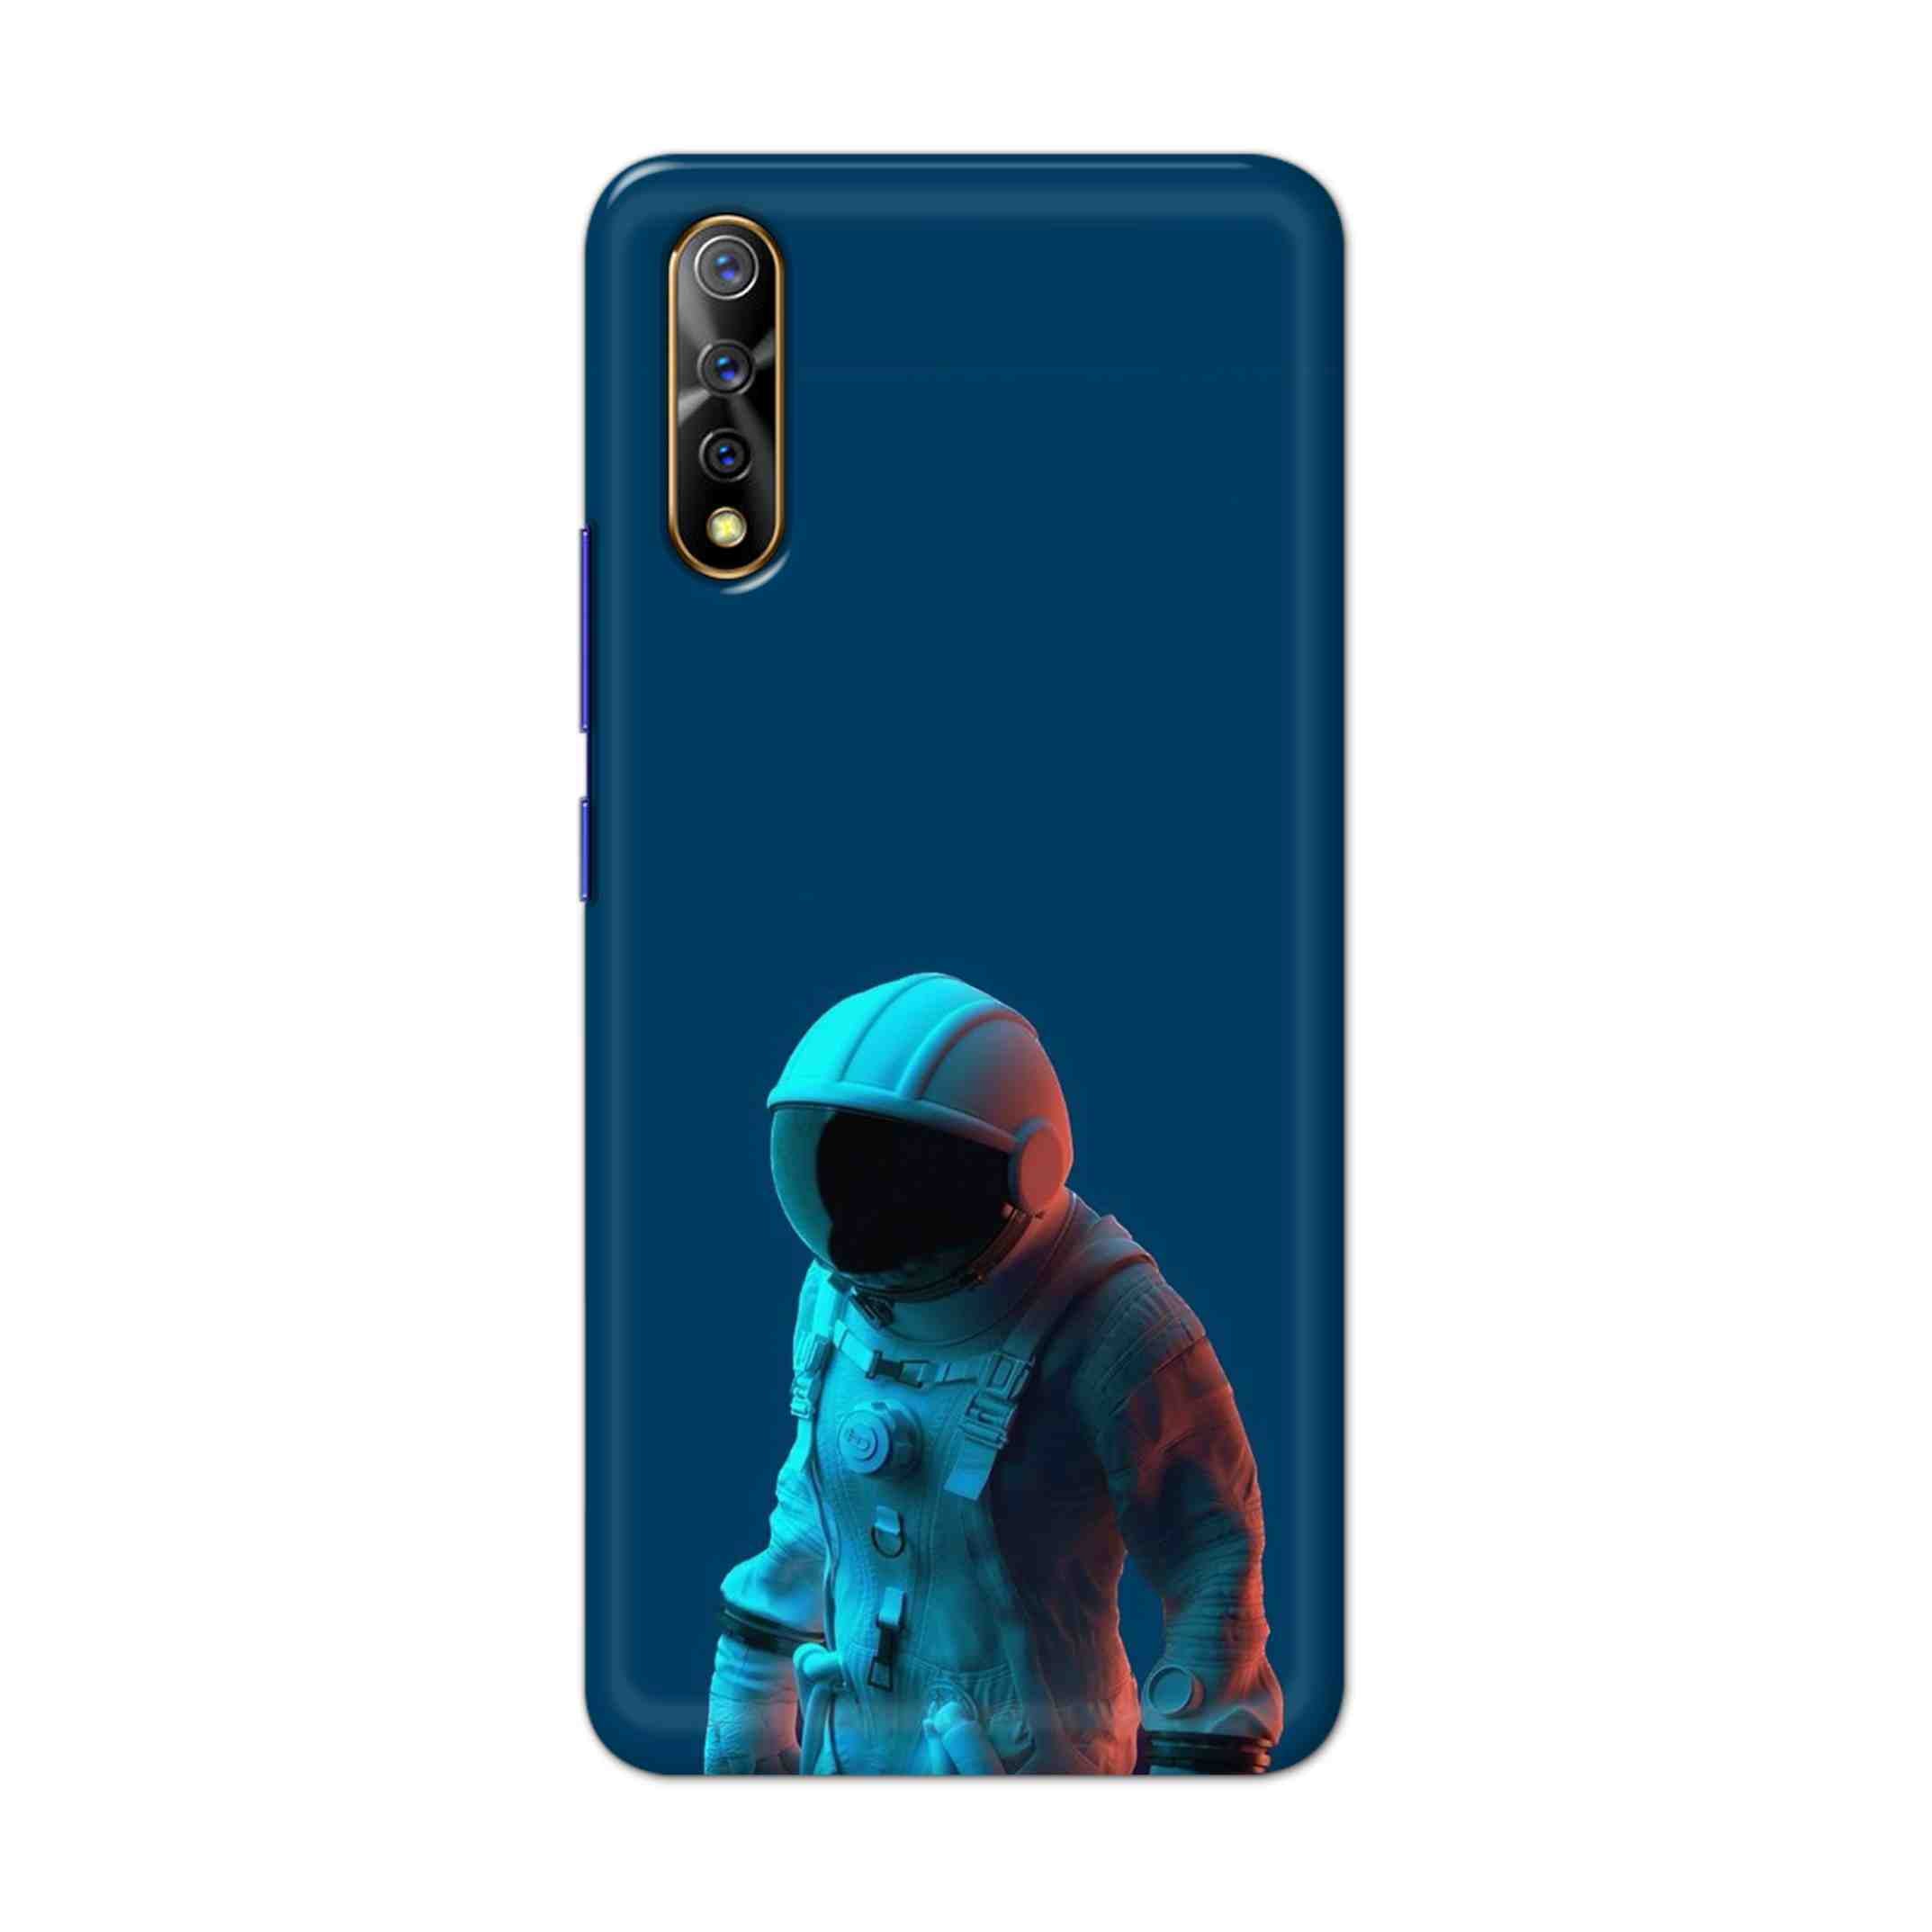 Buy Blue Astronaut Hard Back Mobile Phone Case Cover For Vivo S1 / Z1x Online